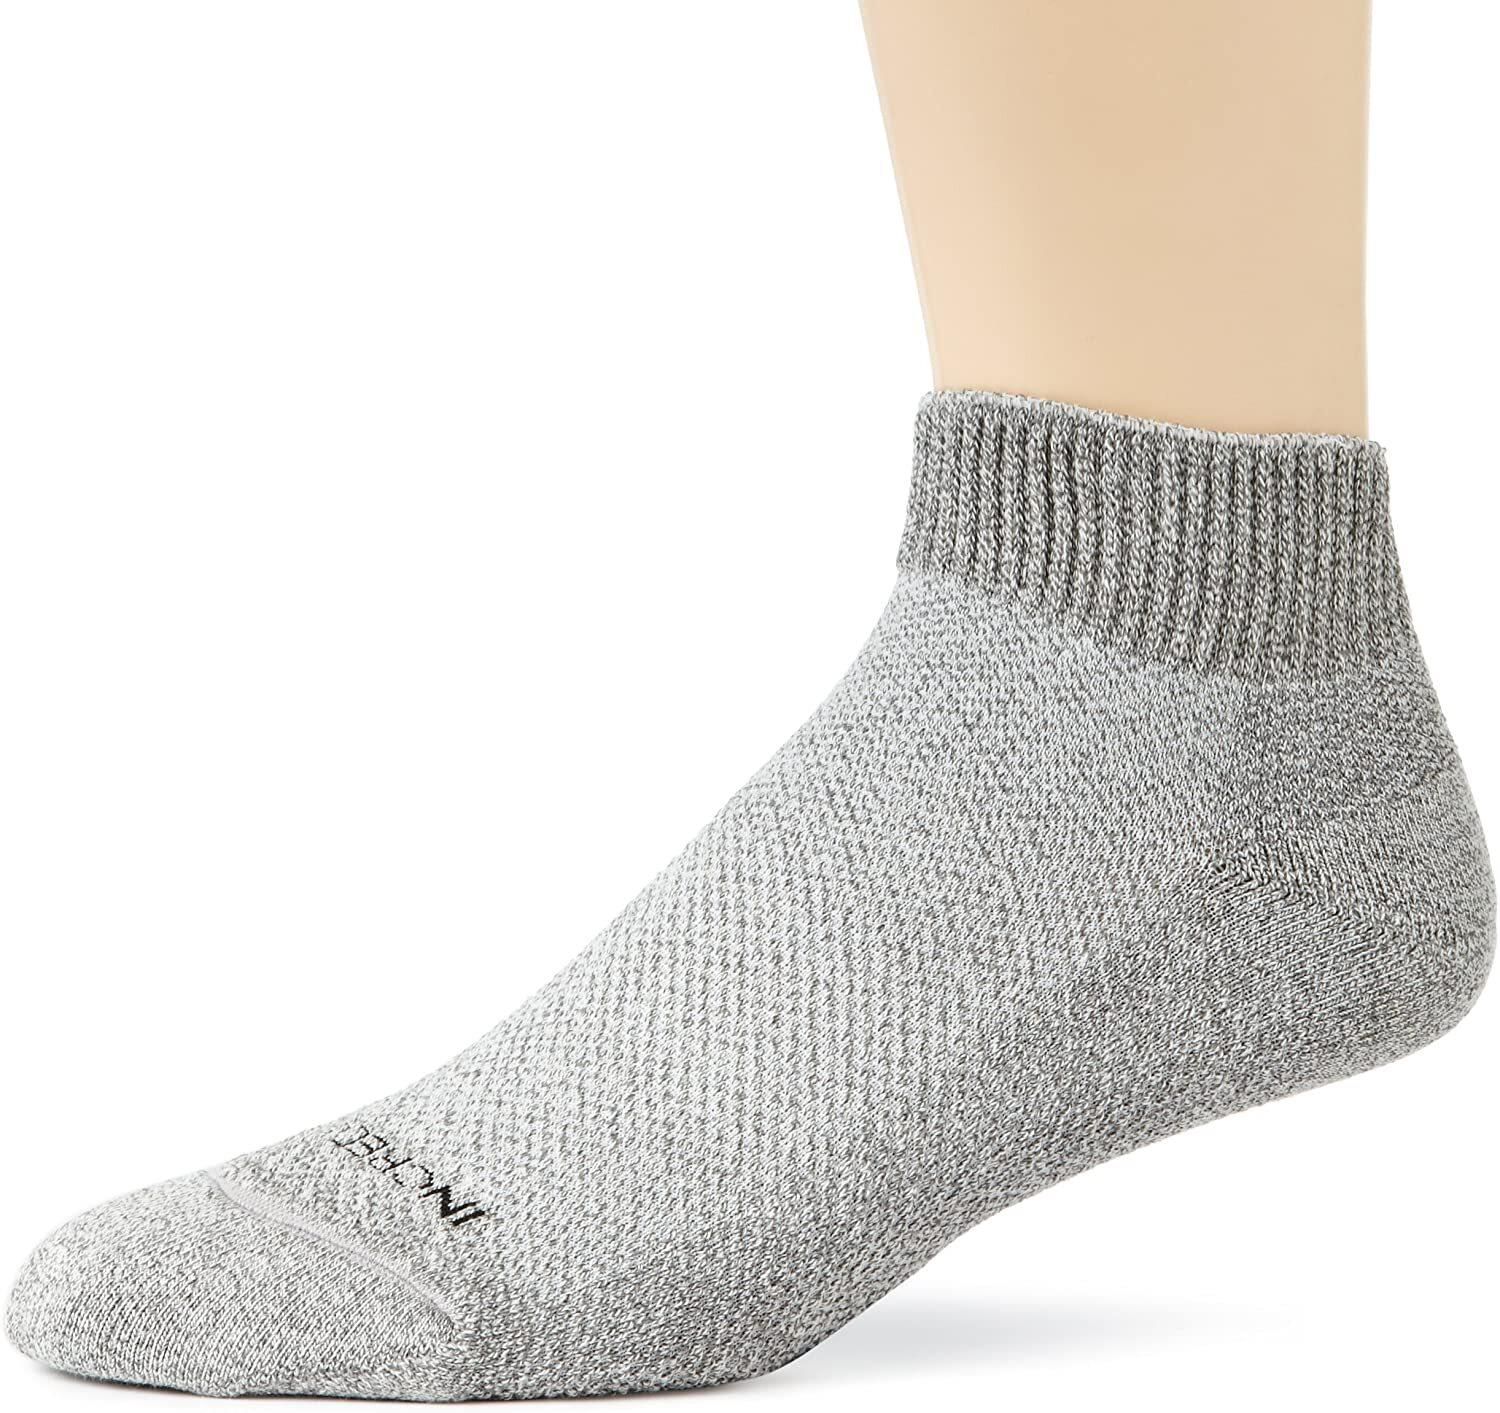 Incrediwear Incredisocks Diabetic Ankle Sock With Bamboo Charcoal/Germanium Blend, Grey, Medium